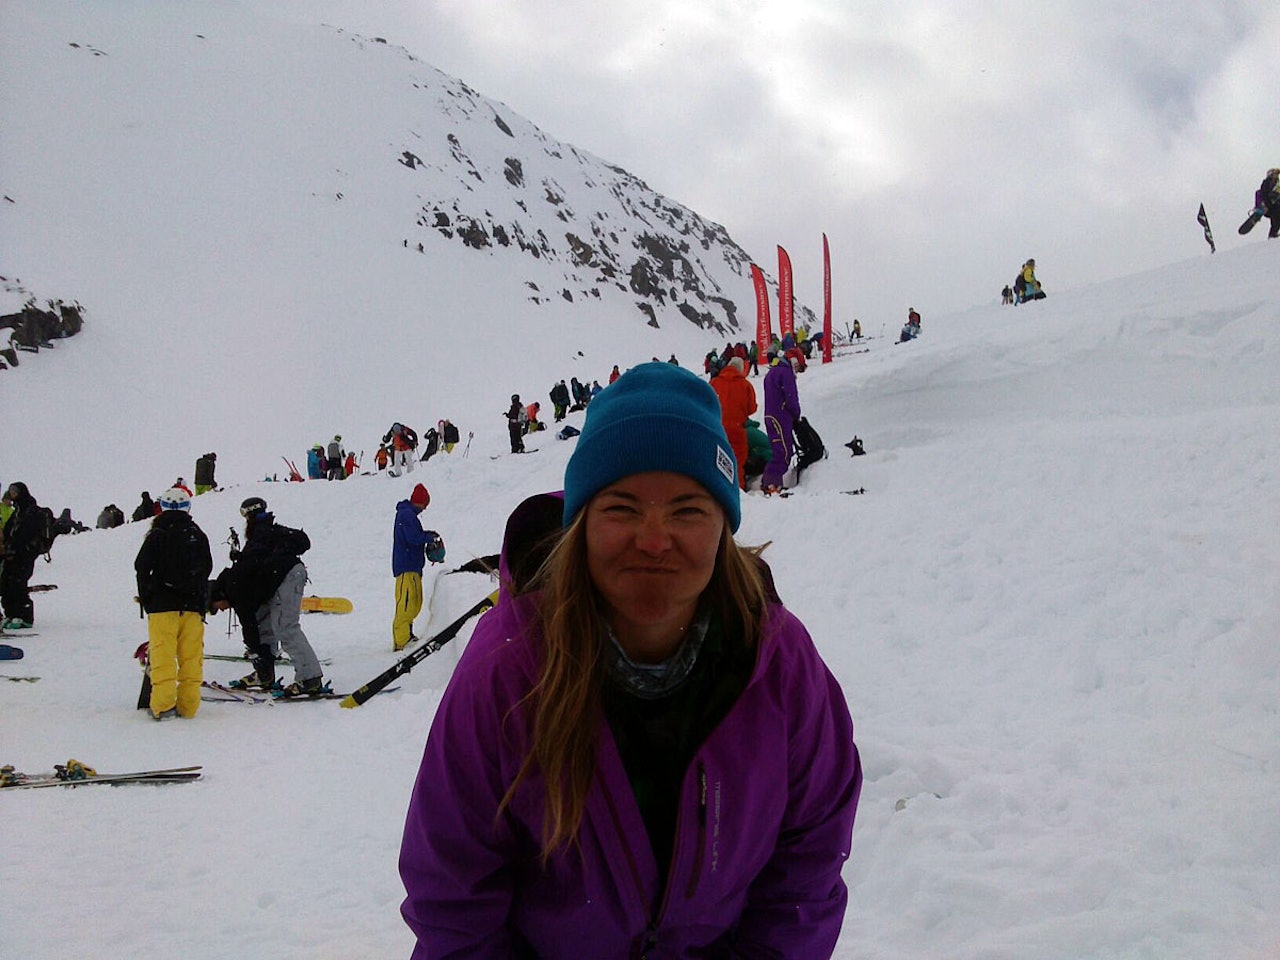 MMS PÅ GRÄNSEN: Pia Nic Gundersen er ferdig med sitt første åk i årets Scandinavian Big Mountain Championships i Riksgränsen, og det meste tyder på at hun leder. Her lager hun duckface blant publikum.